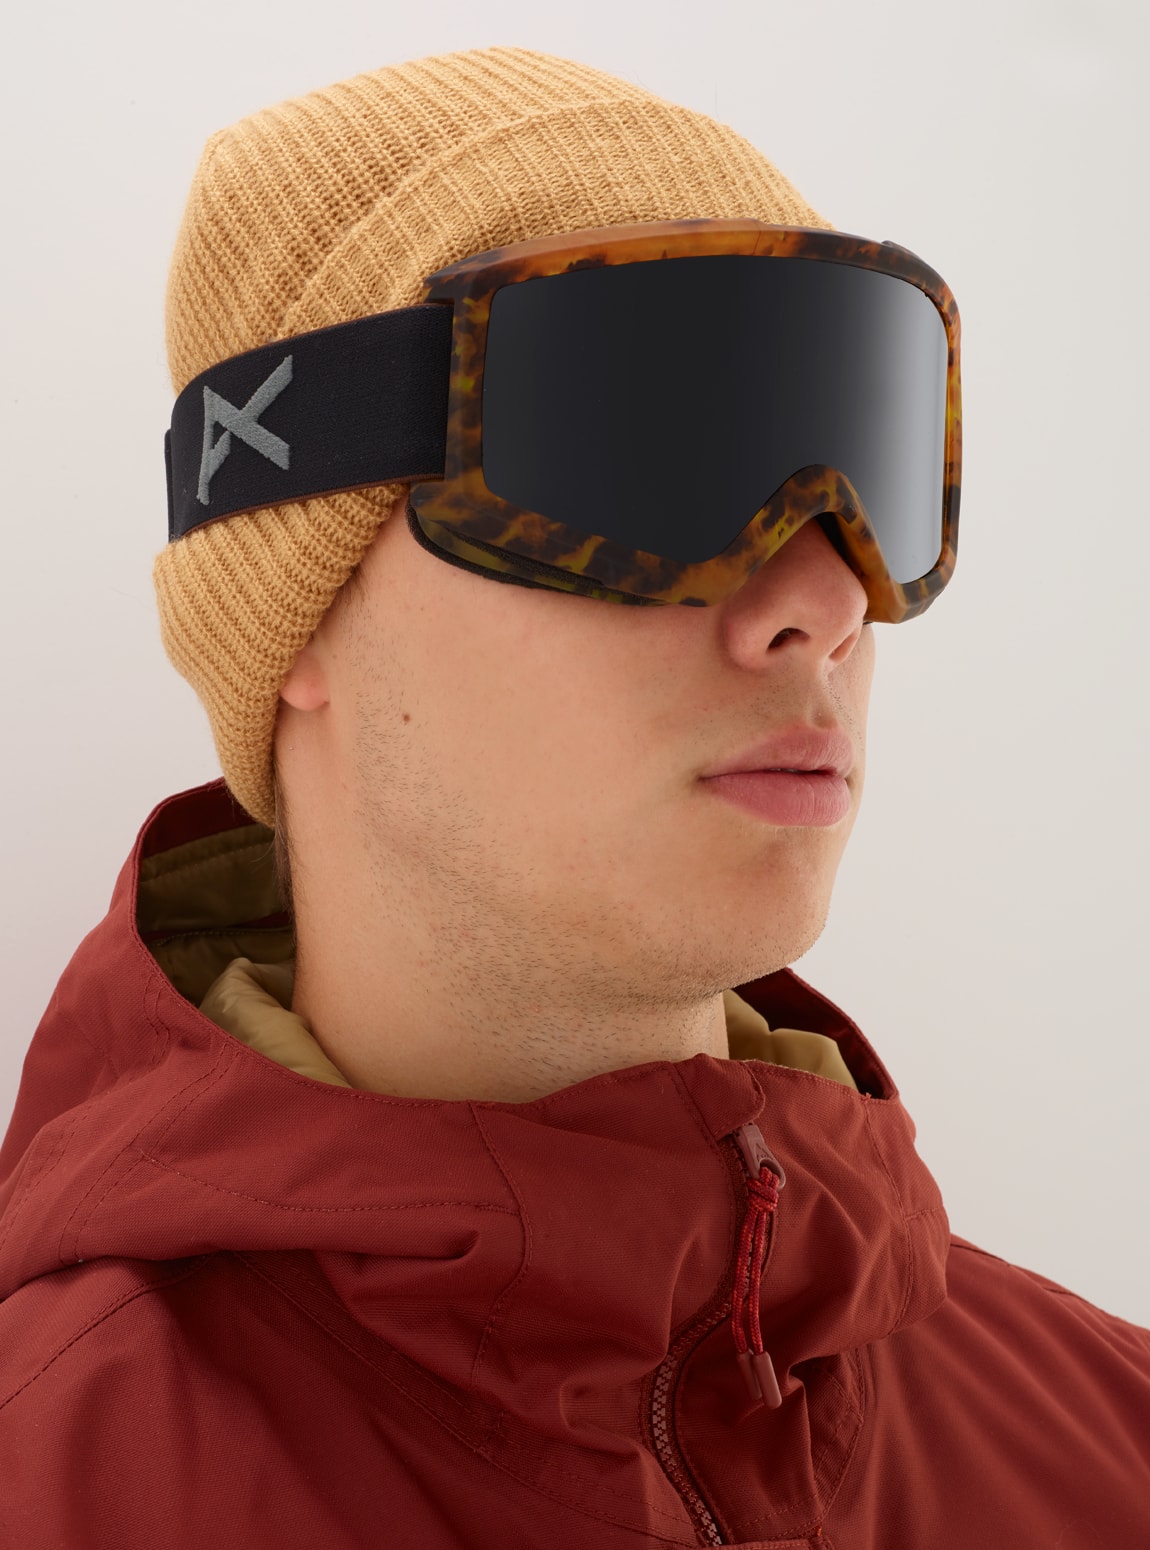 Details about   Man snowboard mask anon helix 2.0 show original title 